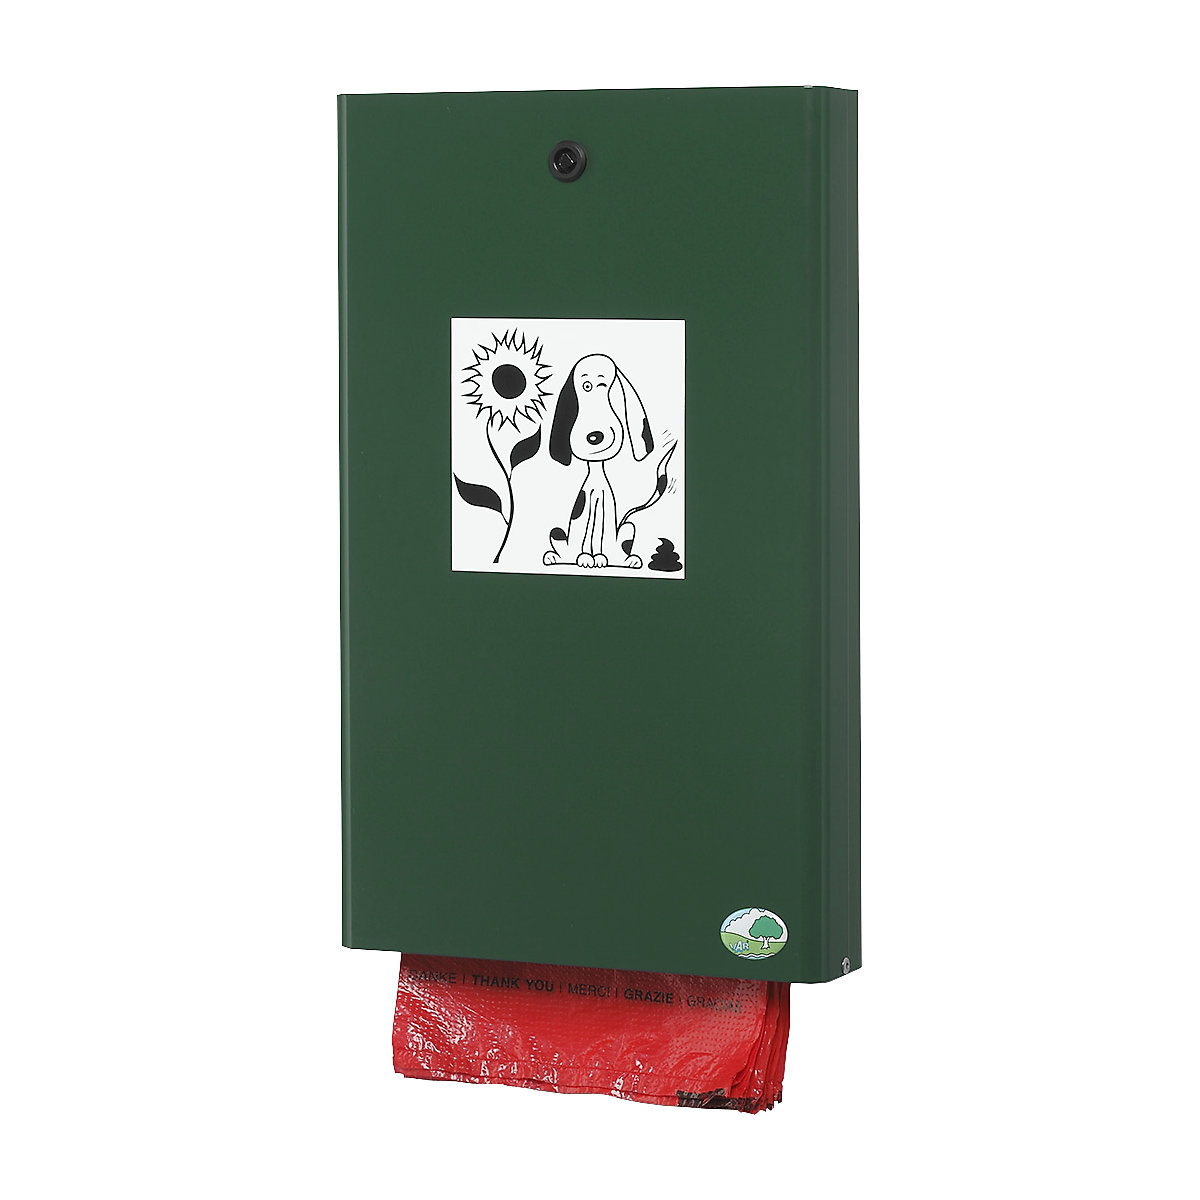 Doggy bag dispenser – VAR